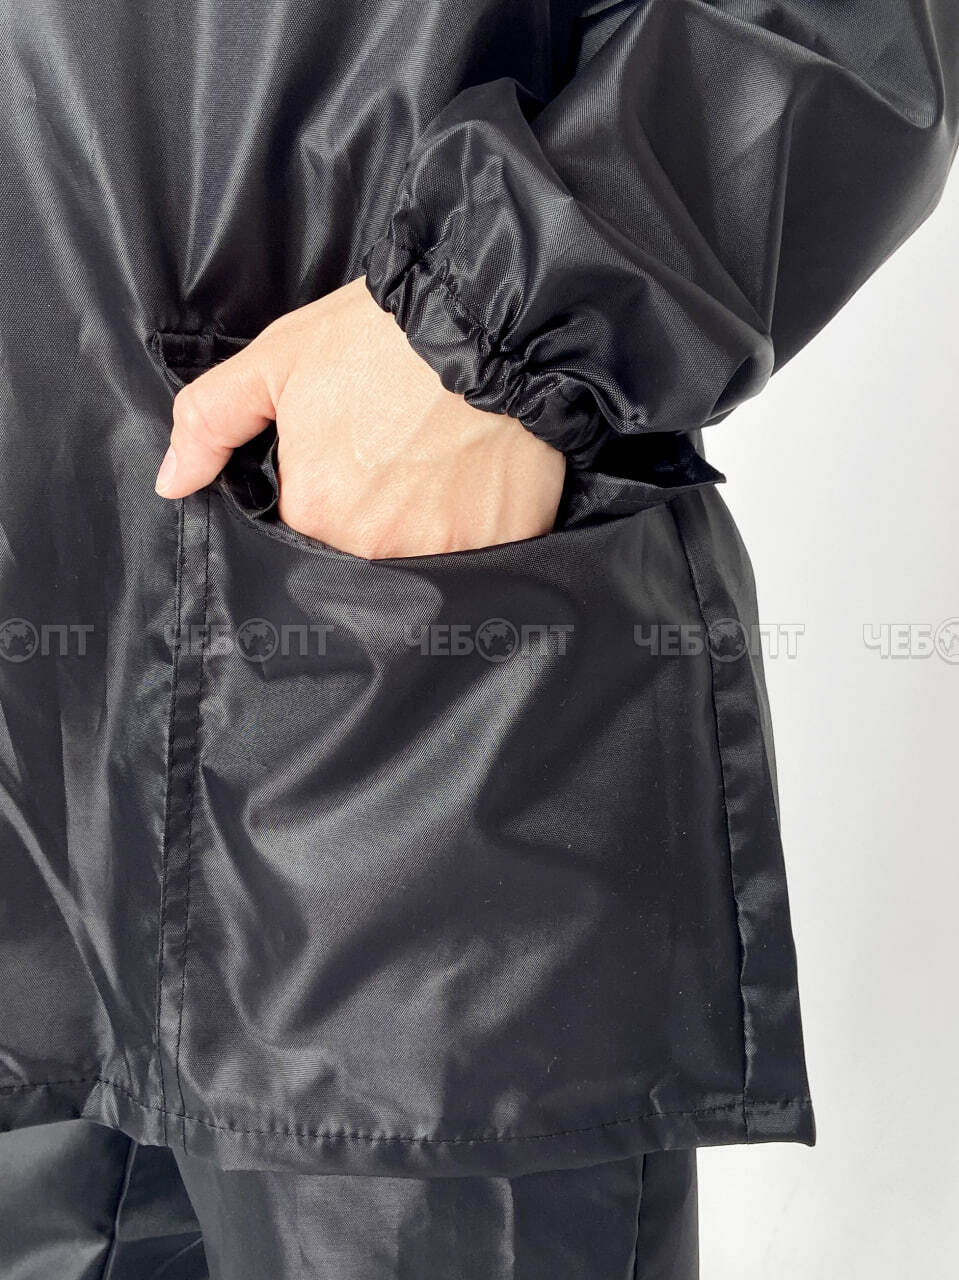 Костюм-дождевик (куртка, брюки),ЧЕБПРО,размер 48-50,100% полиэстер, Арт. ДожКостМуж/черный, МПС [15] СобПр. ЧЕБОПТ.